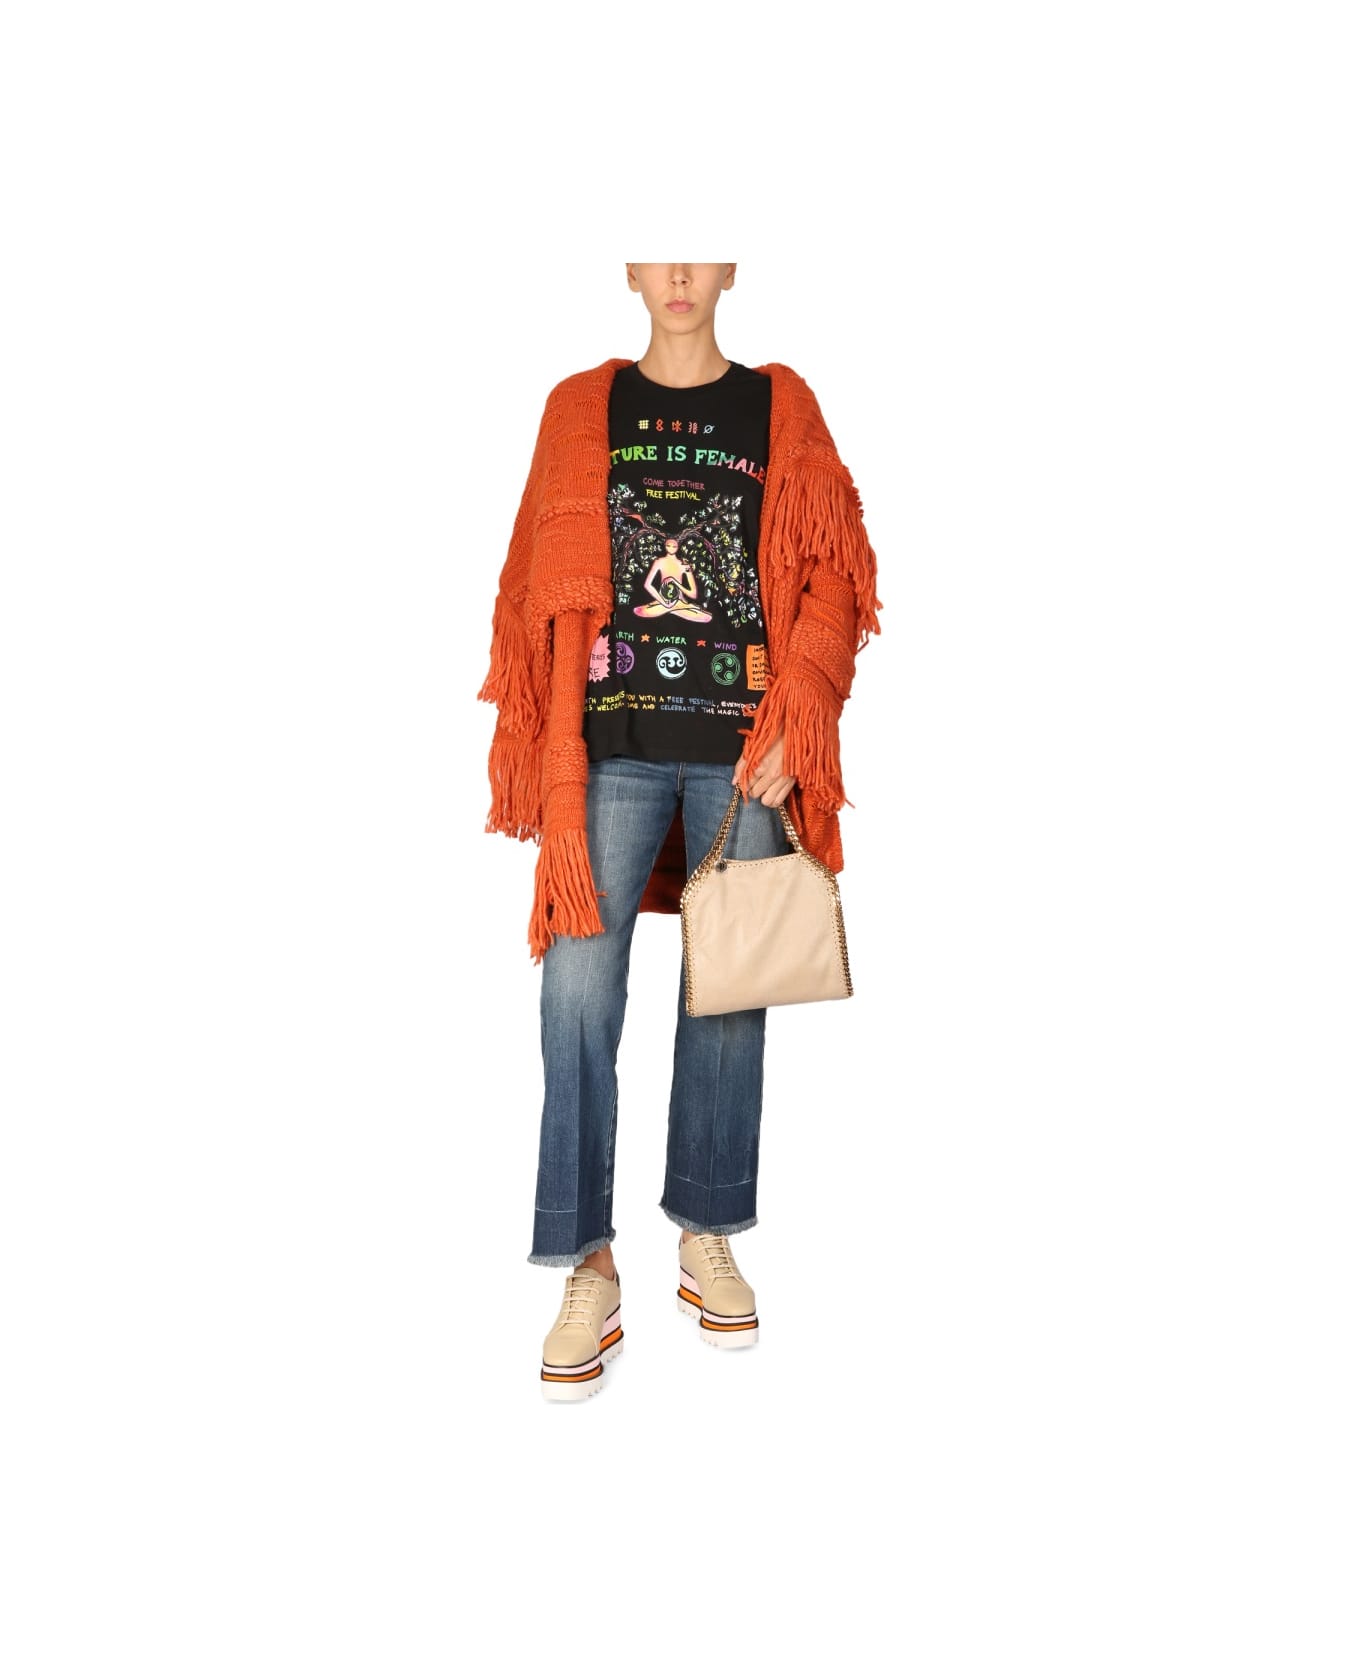 Stella McCartney Knitted Textured Coat - BORDEAUX カーディガン